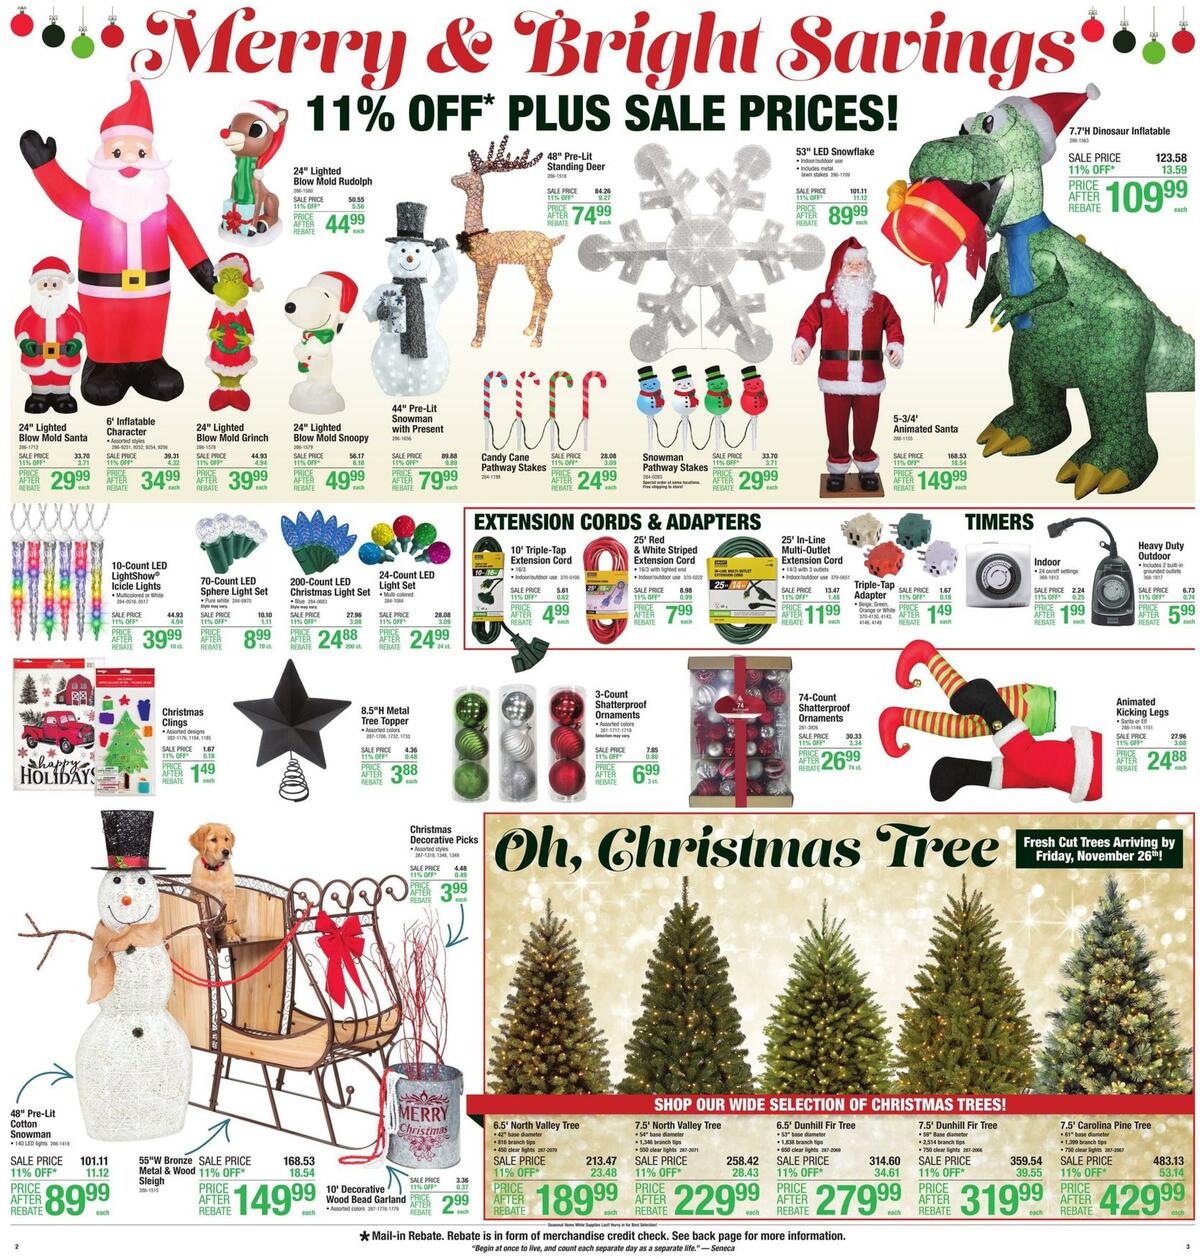 Menards Christmas Decor Weekly Ad from November 4